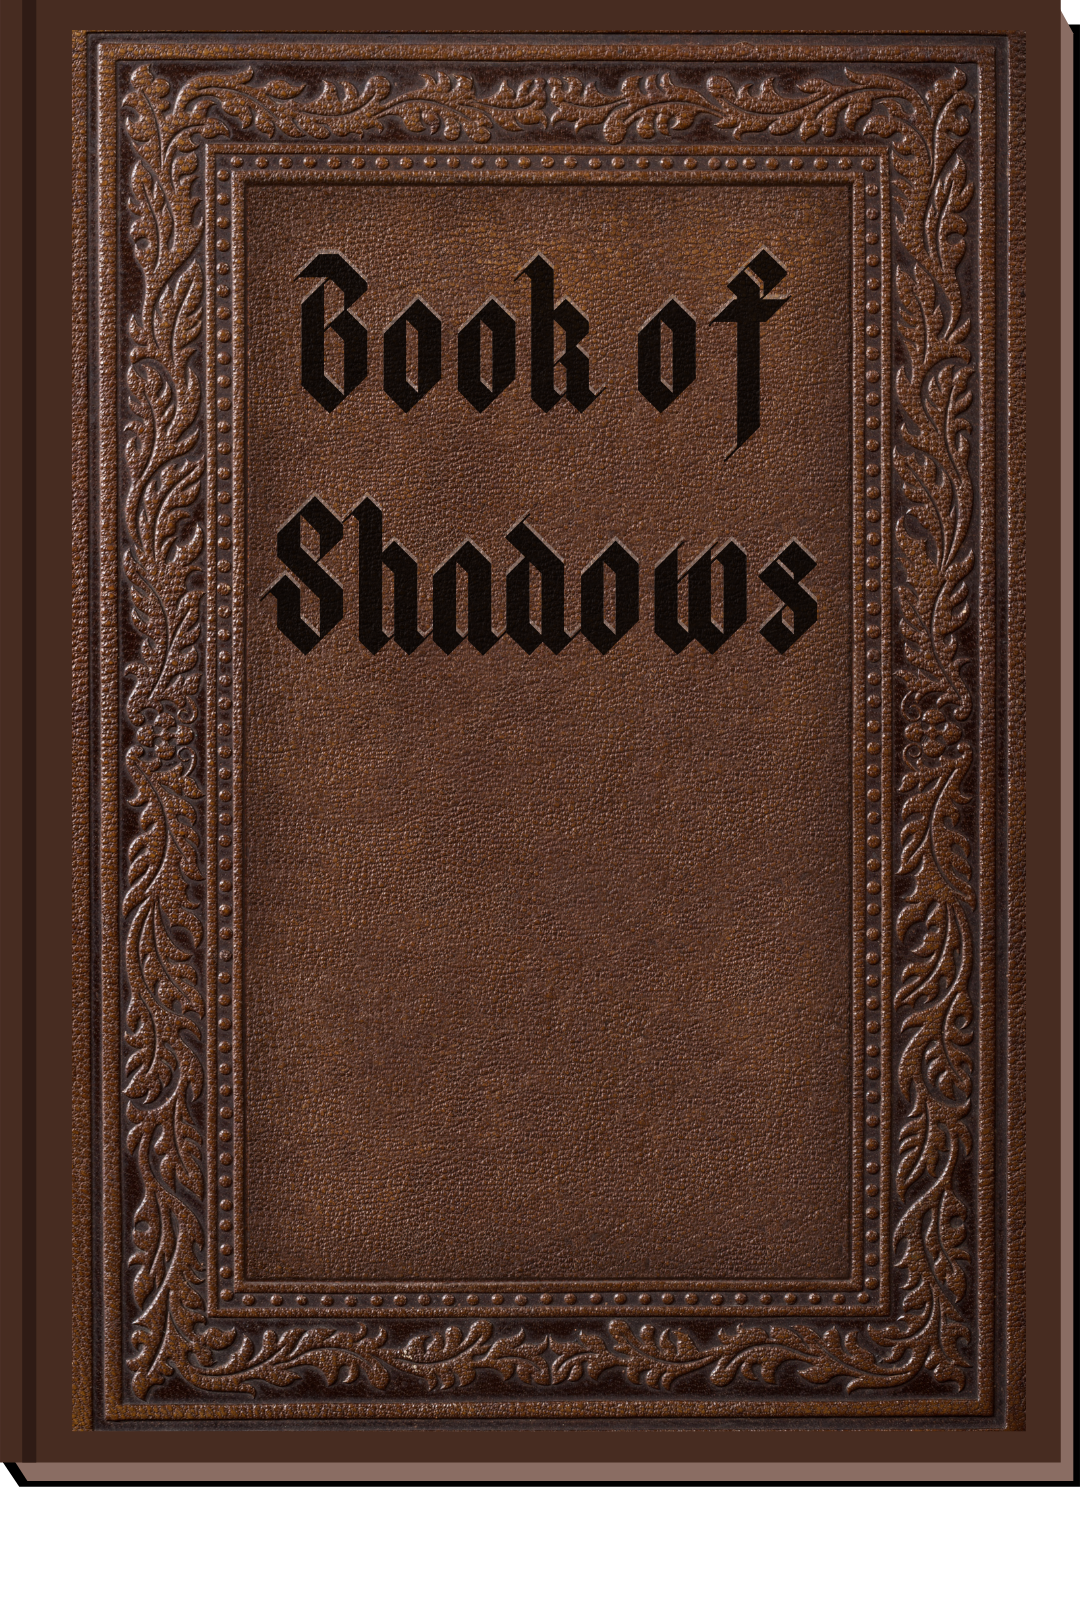 Book of Shadows - Main Site